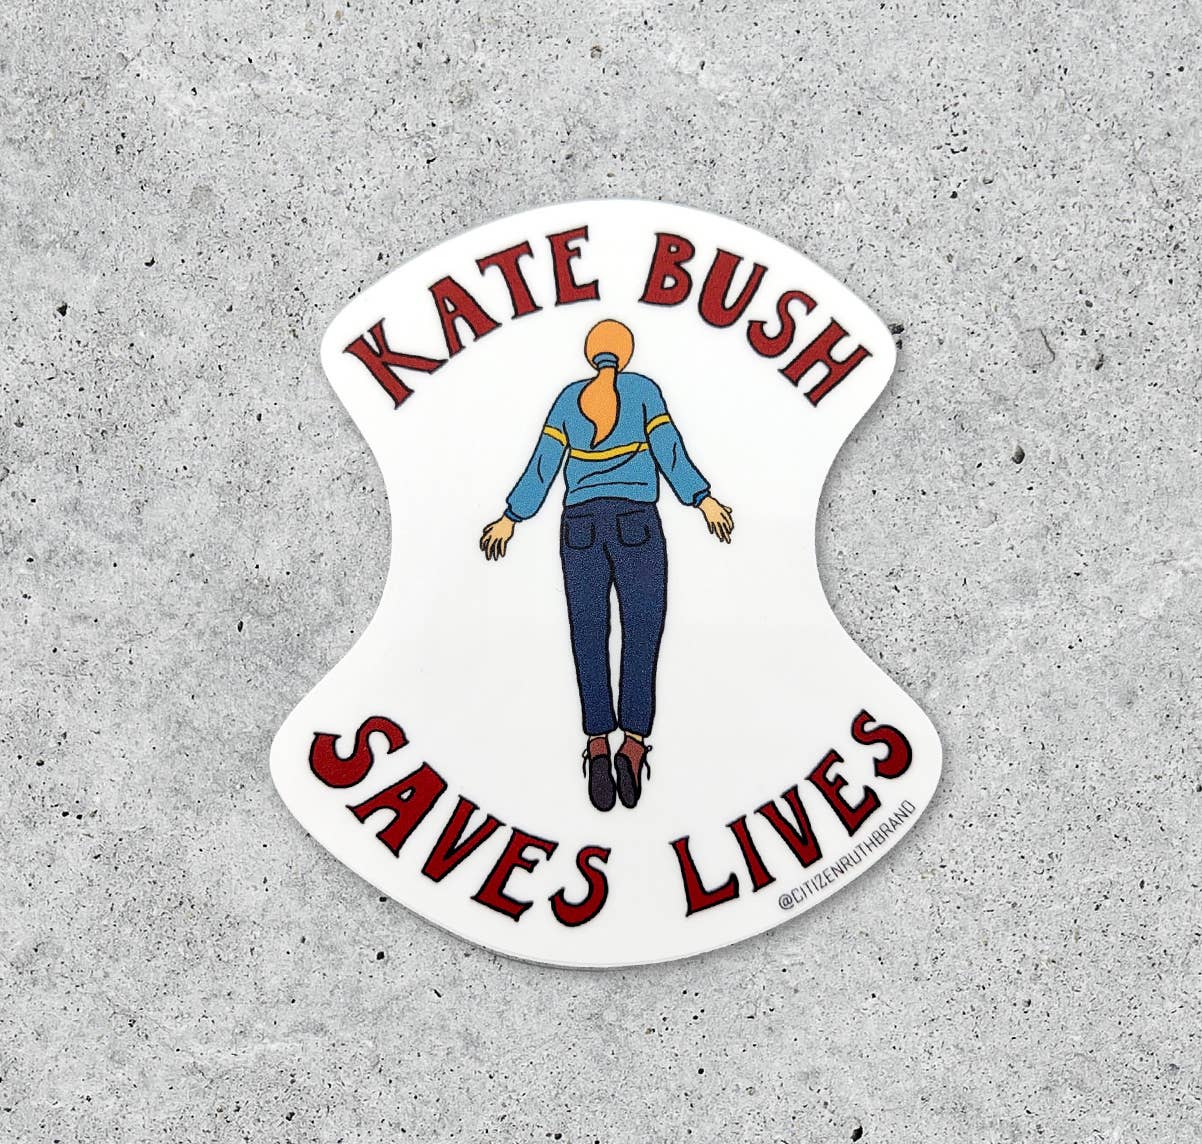 Kate Bush Saves Lives sticker